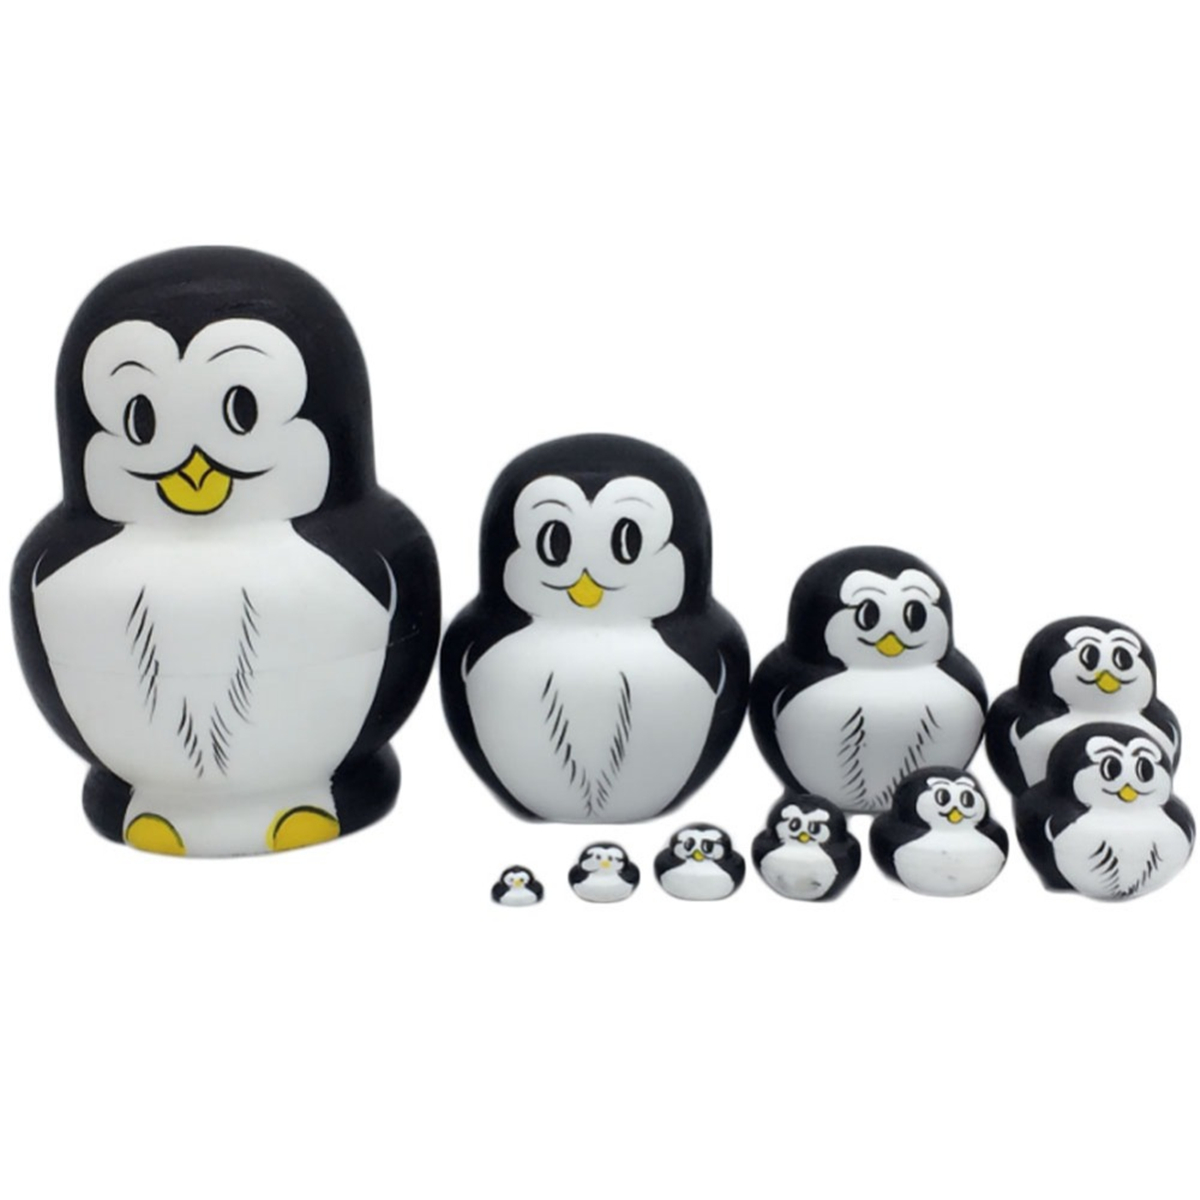 5pcs Russian Nesting Doll Mini Stacking Dolls Toys Cartoon Penguin for Kids